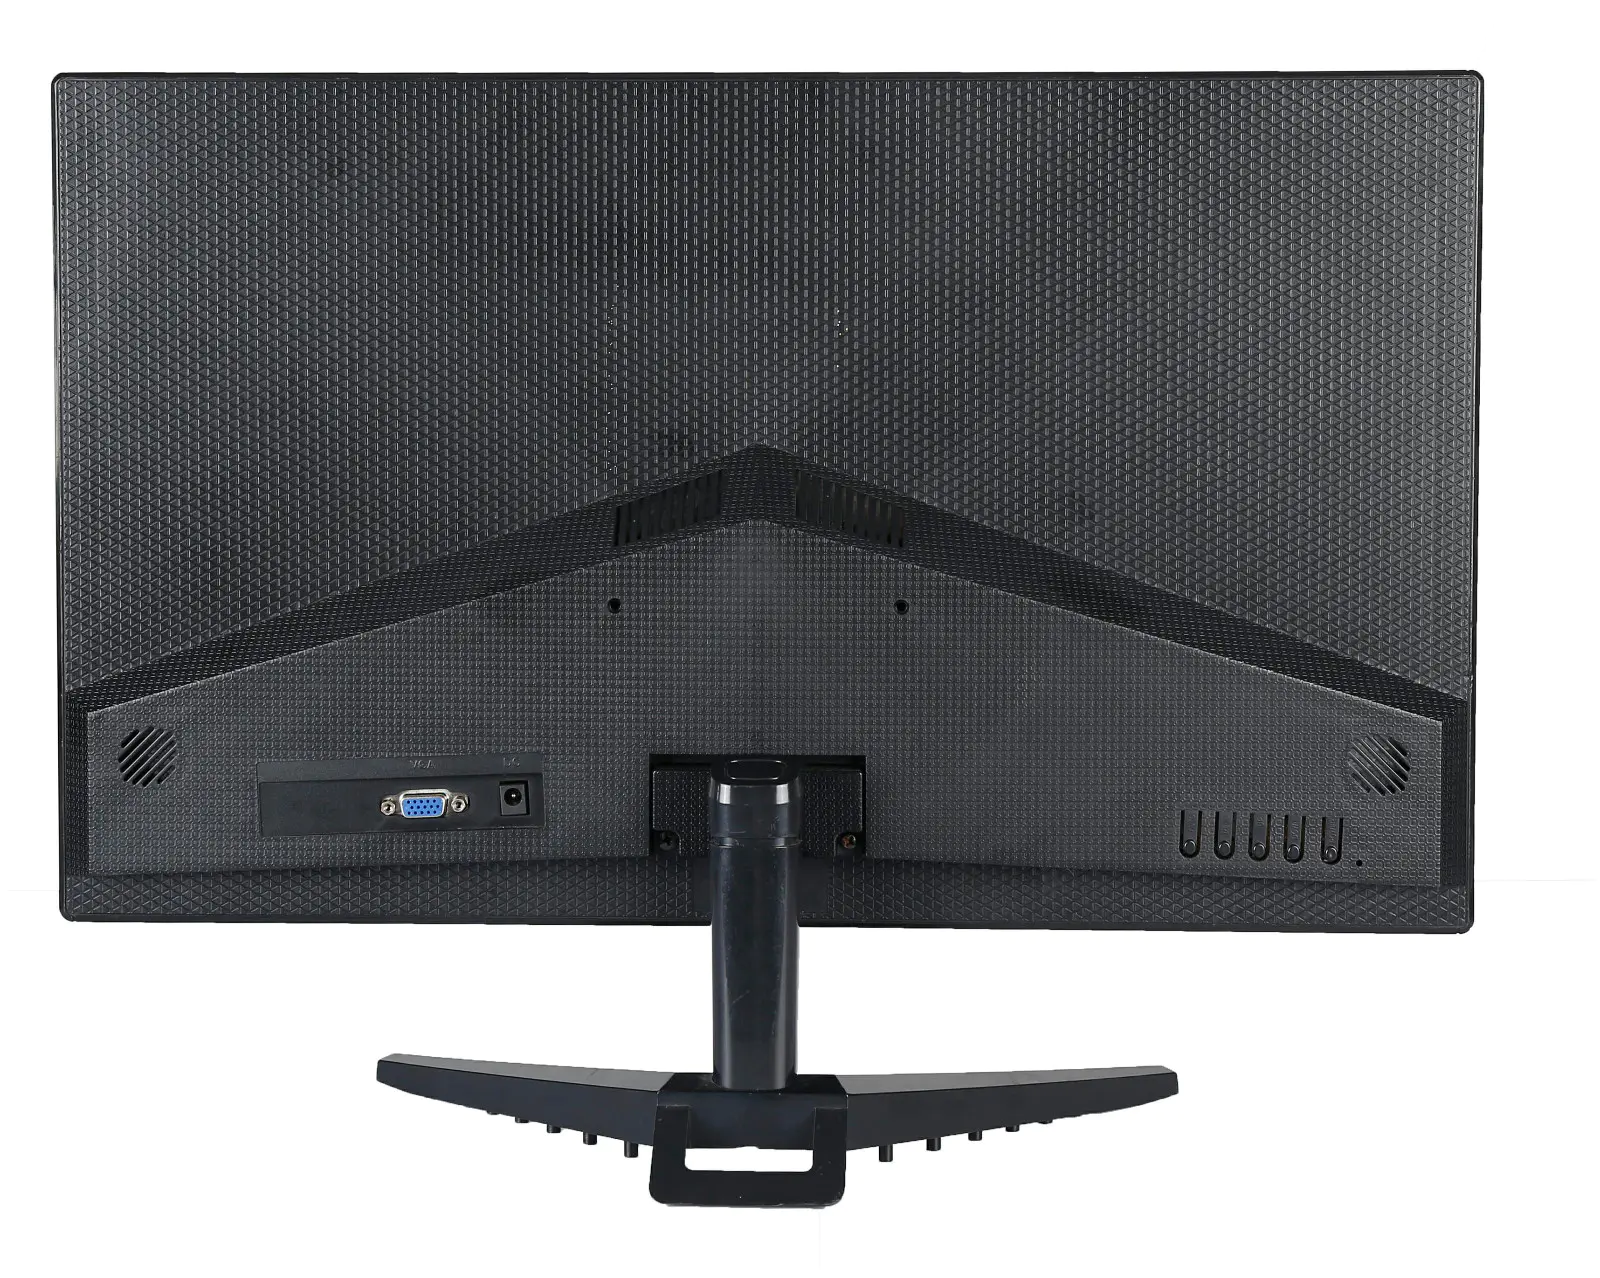 slim boarder 21.5 inch led monitor full hd for lcd screen